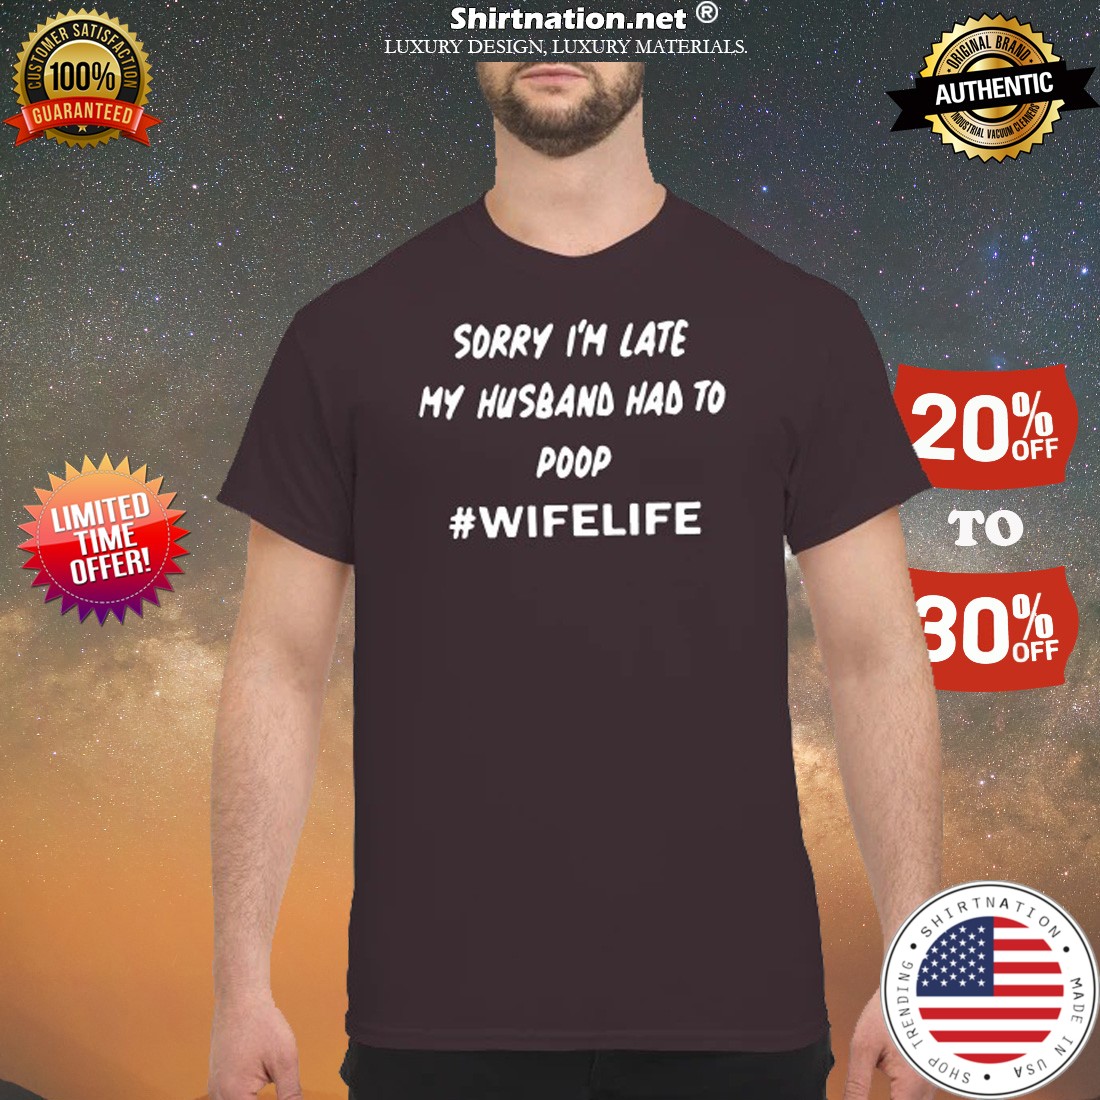 Sorry I'm late my husband had to poop wifelife shirt